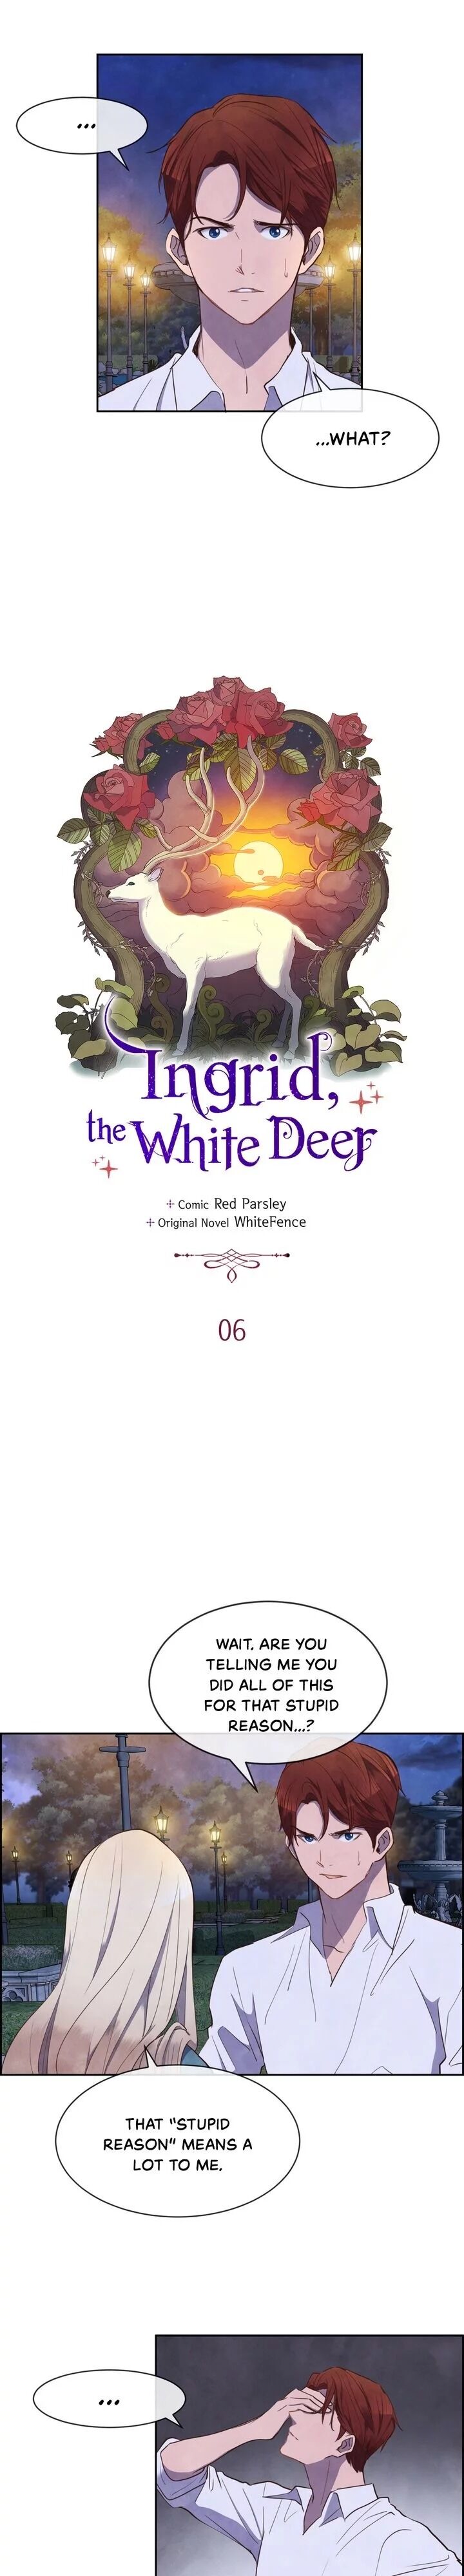 Ingrid, The White Deer - Page 3